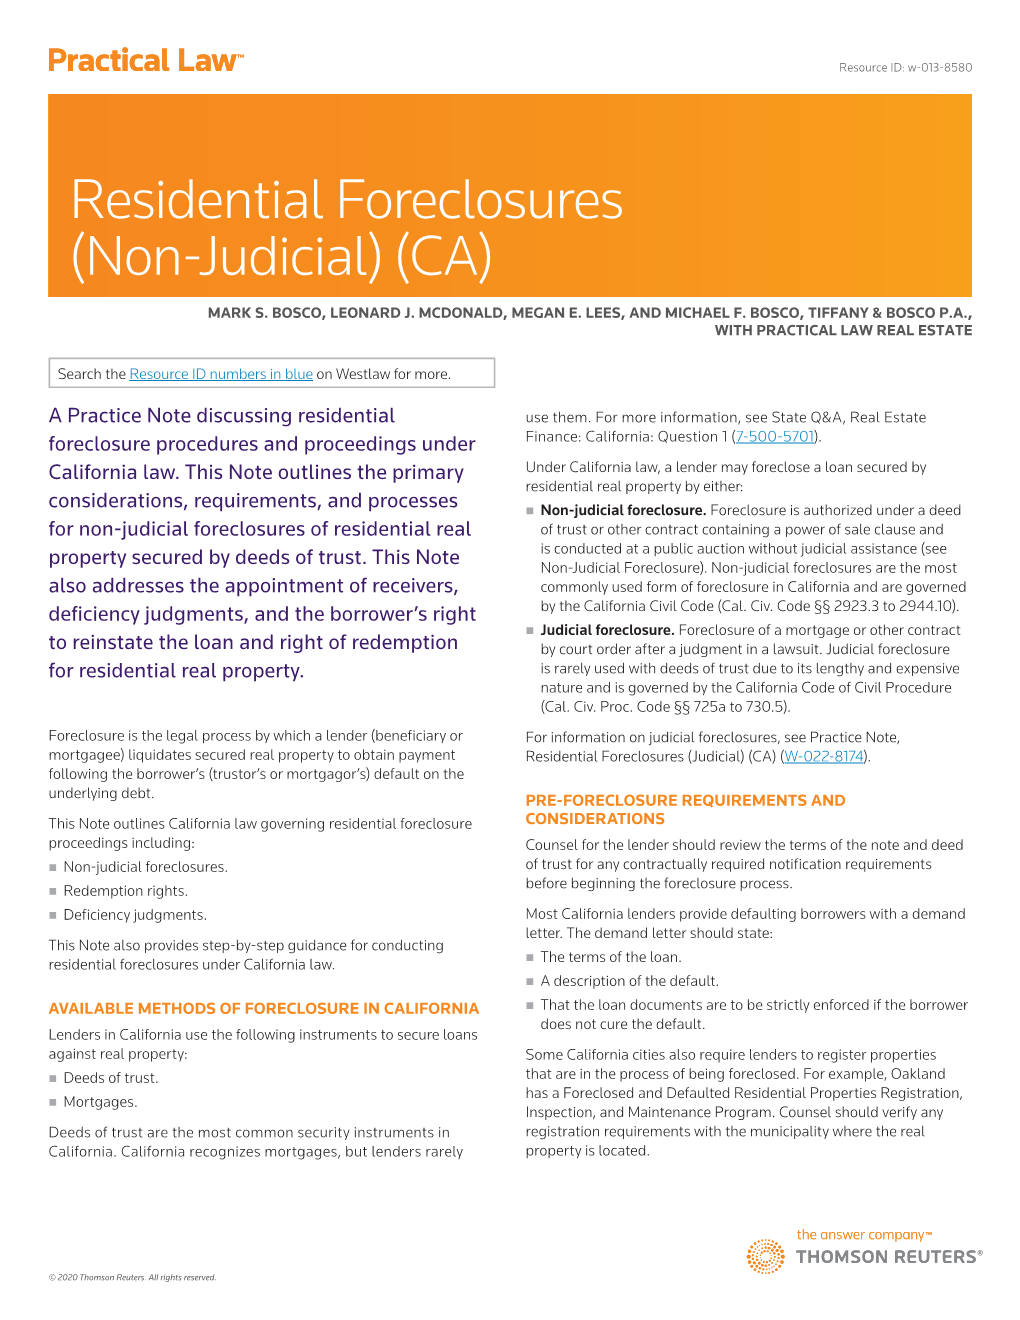 Residential Foreclosures (Non-Judicial) (CA)